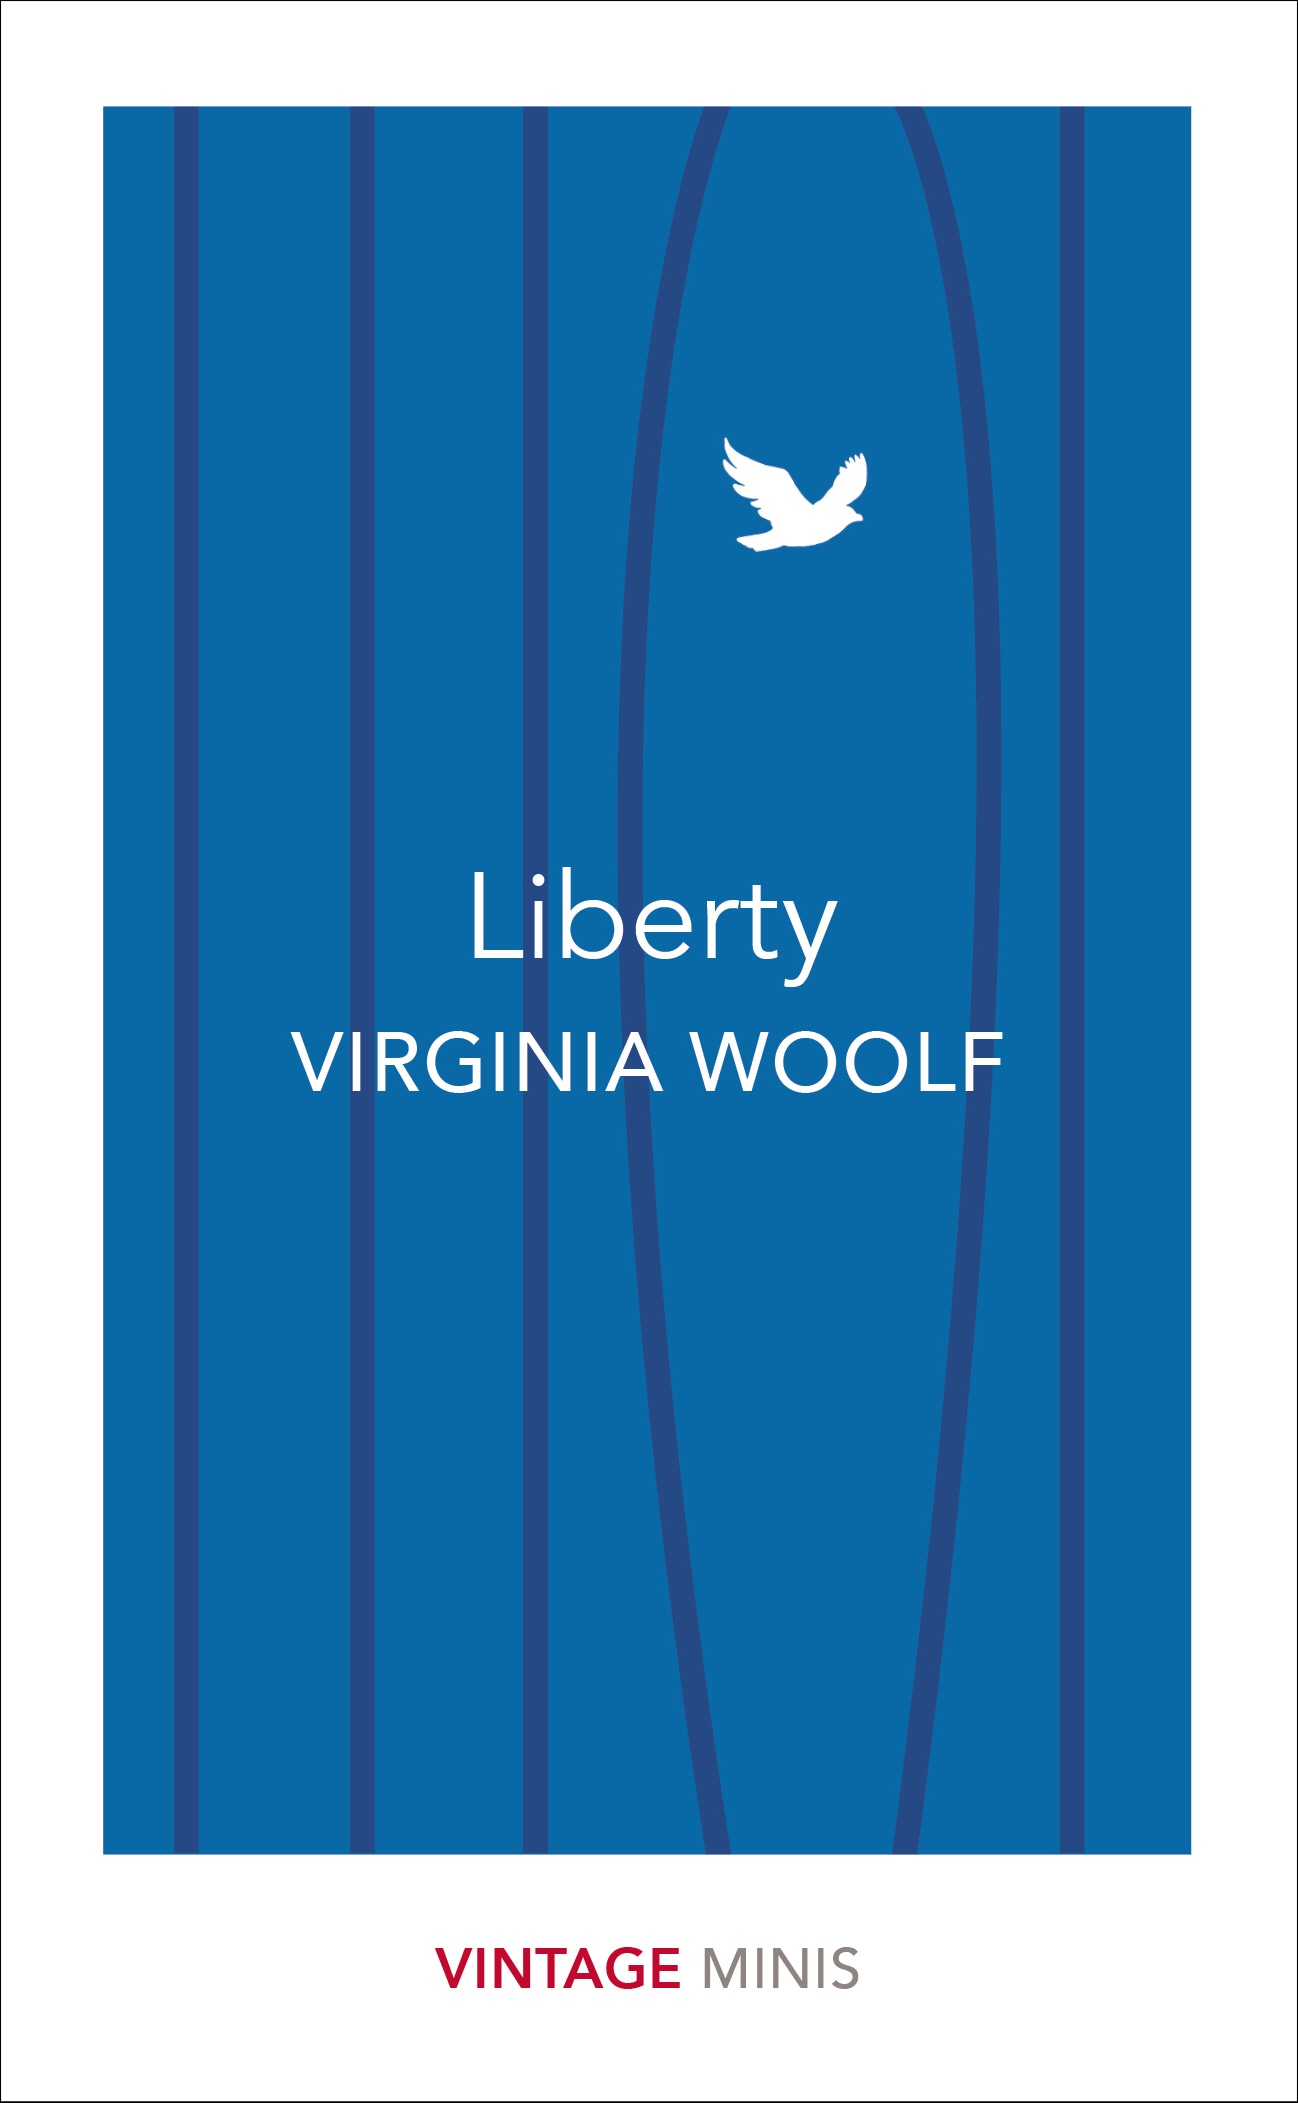 Book “Liberty” by Virginia Woolf — June 8, 2017